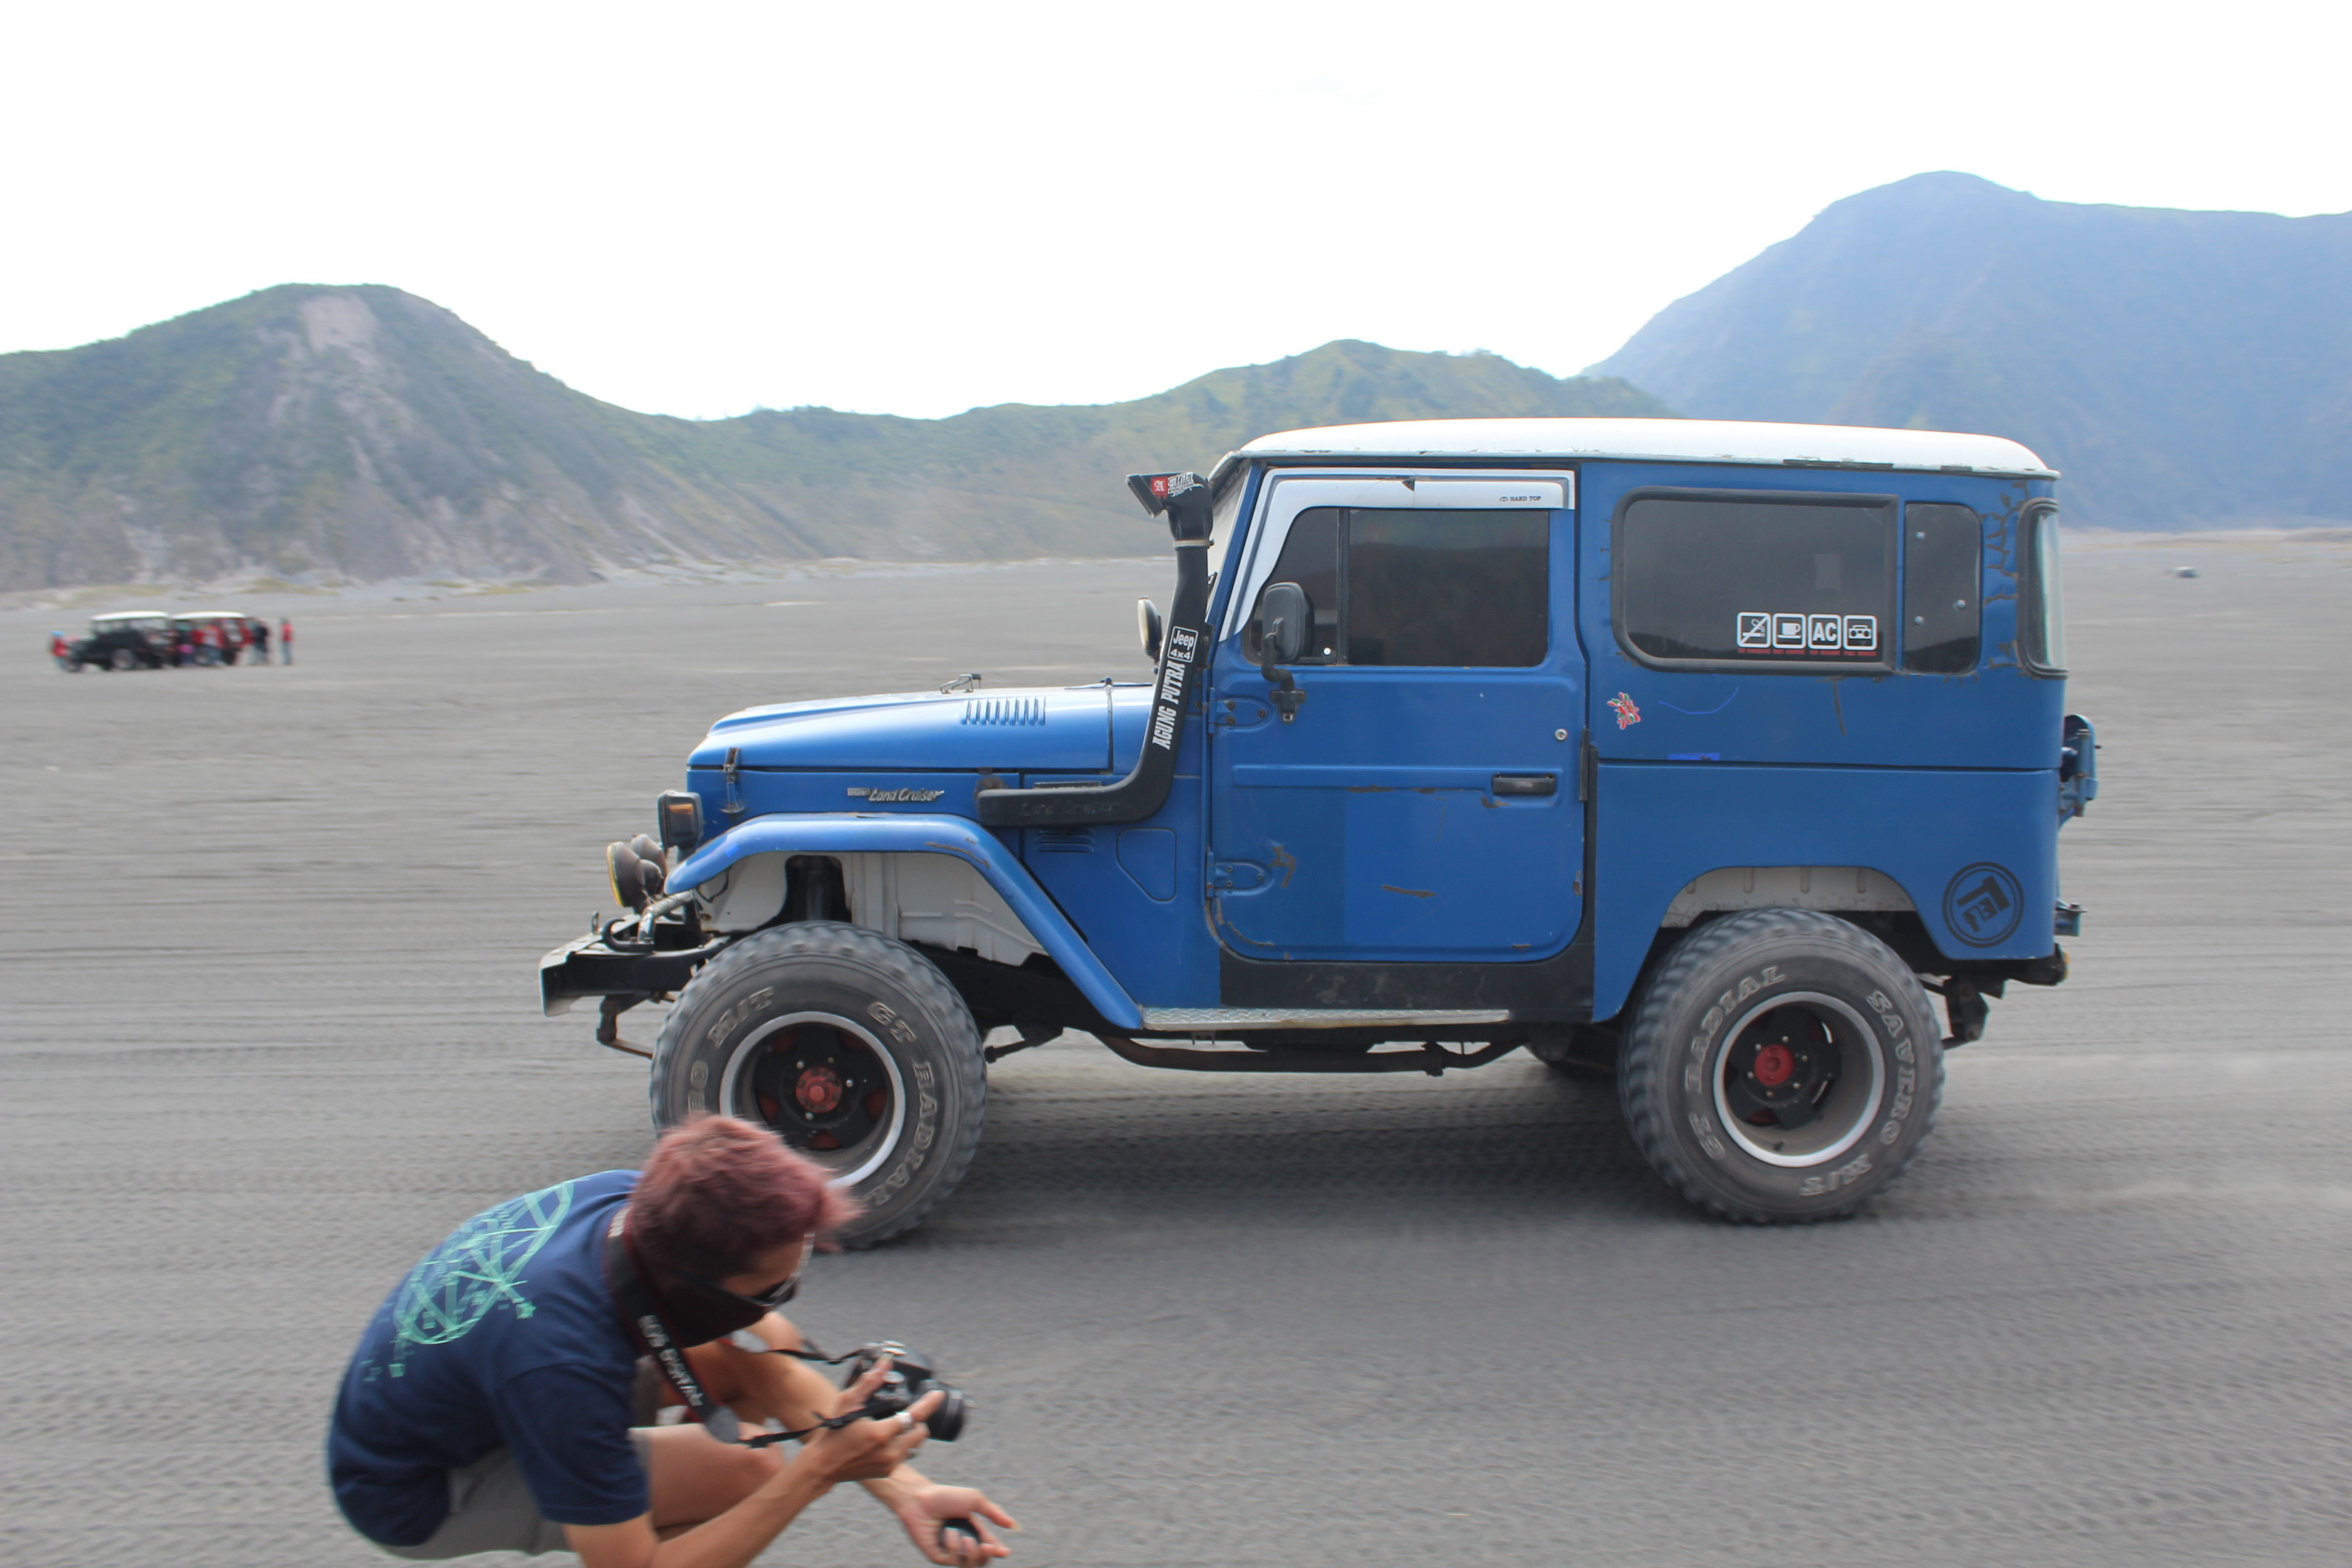 Mobil jeep melintas di atas pasir (c) Rizky Nusantara/Travelingyuk